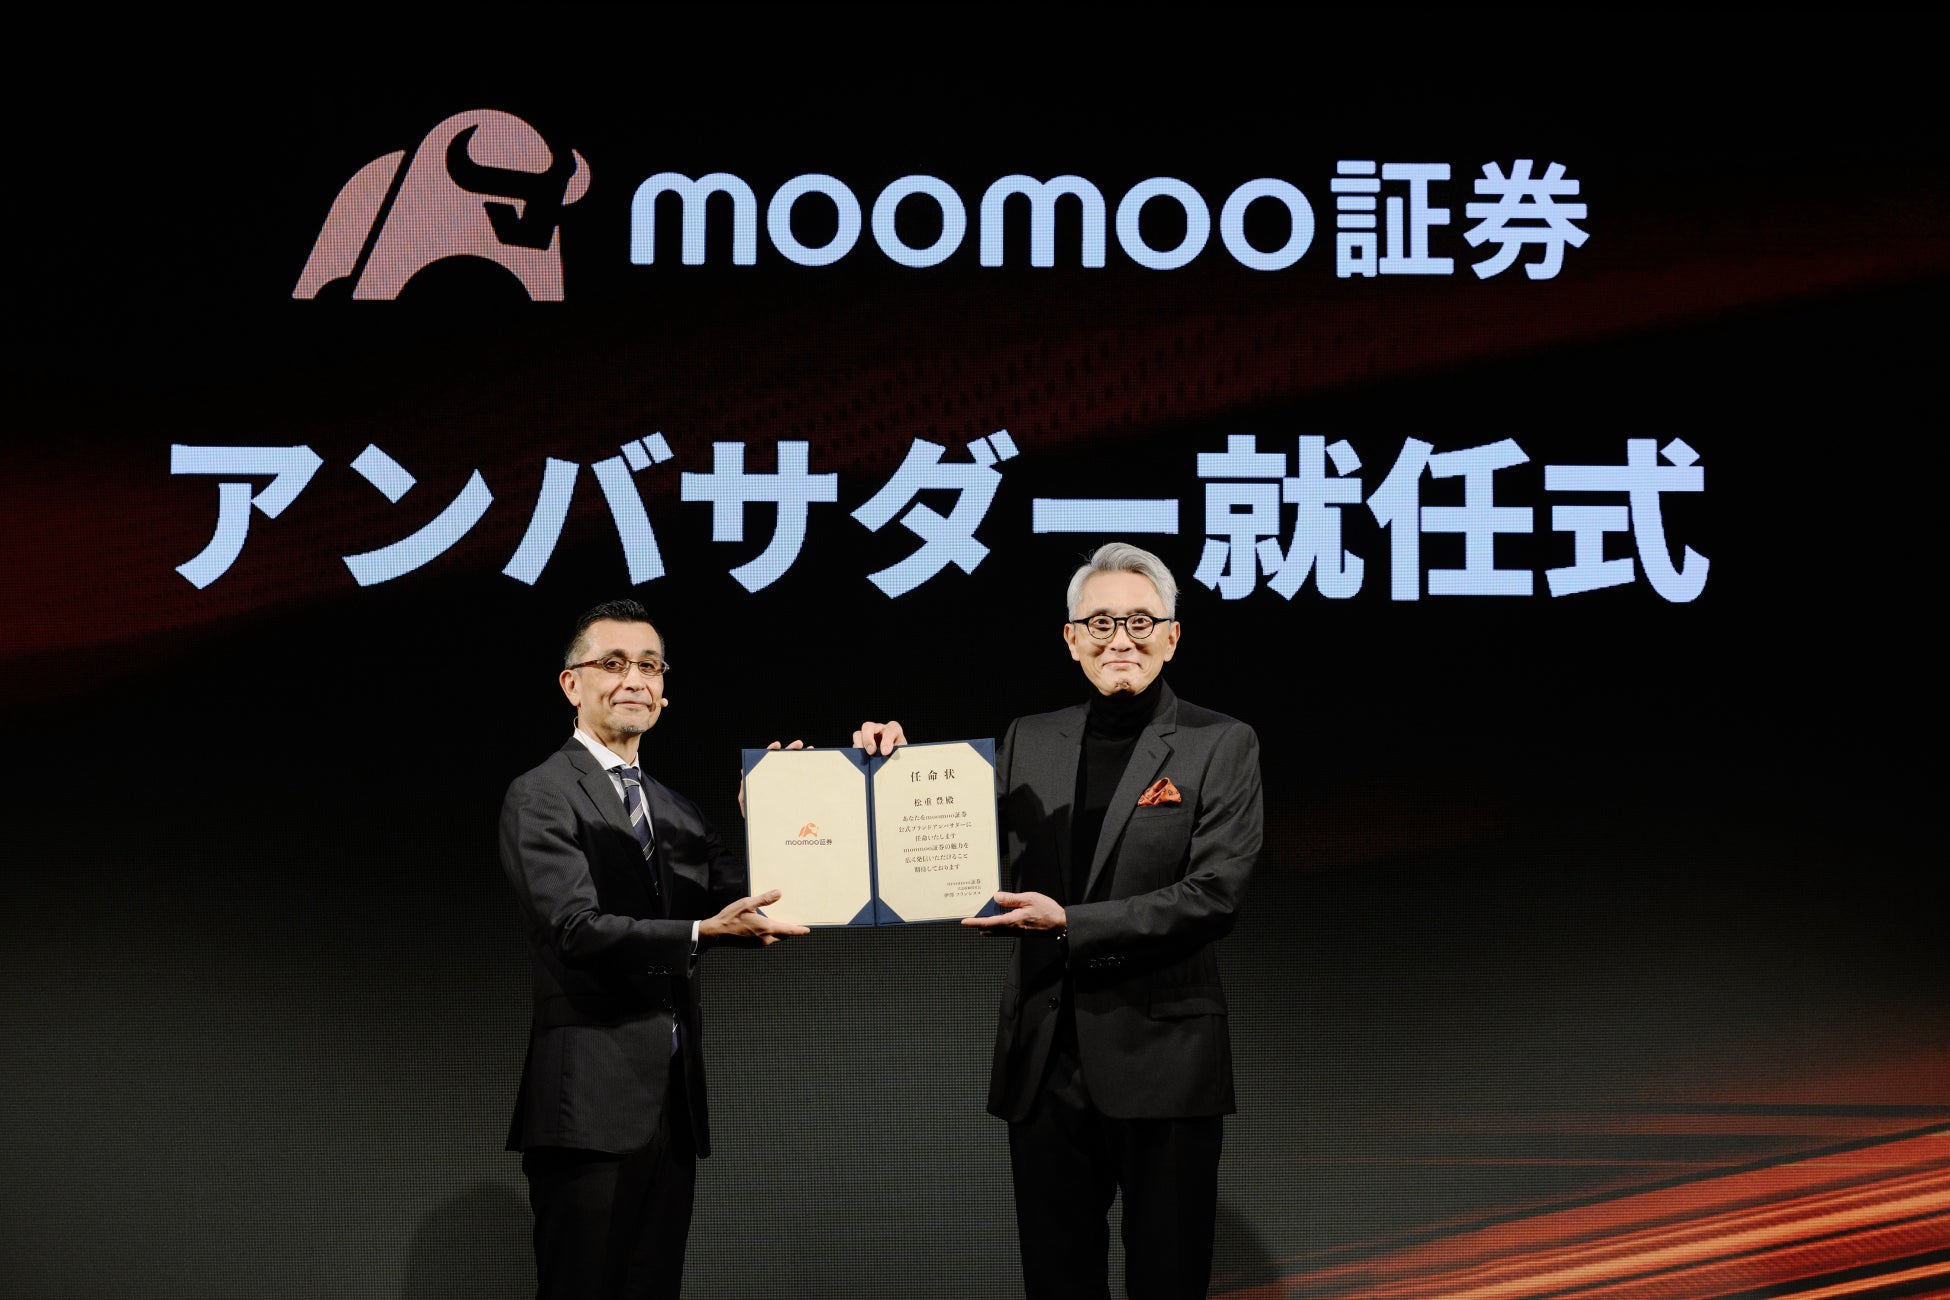 moomoo証券、日本における戦略発表会を実施。　　　　　　　　俳優の松重豊さんが公式ブランドアンバサダーに就任